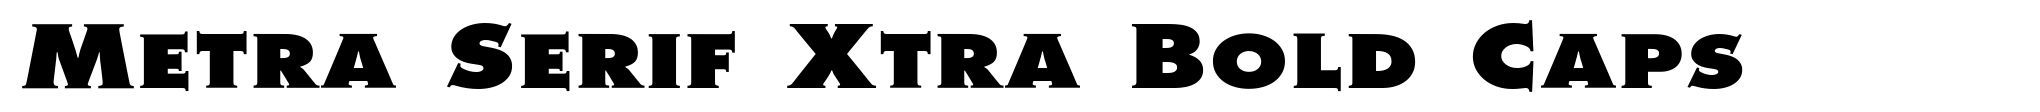 Metra Serif Xtra Bold Caps image